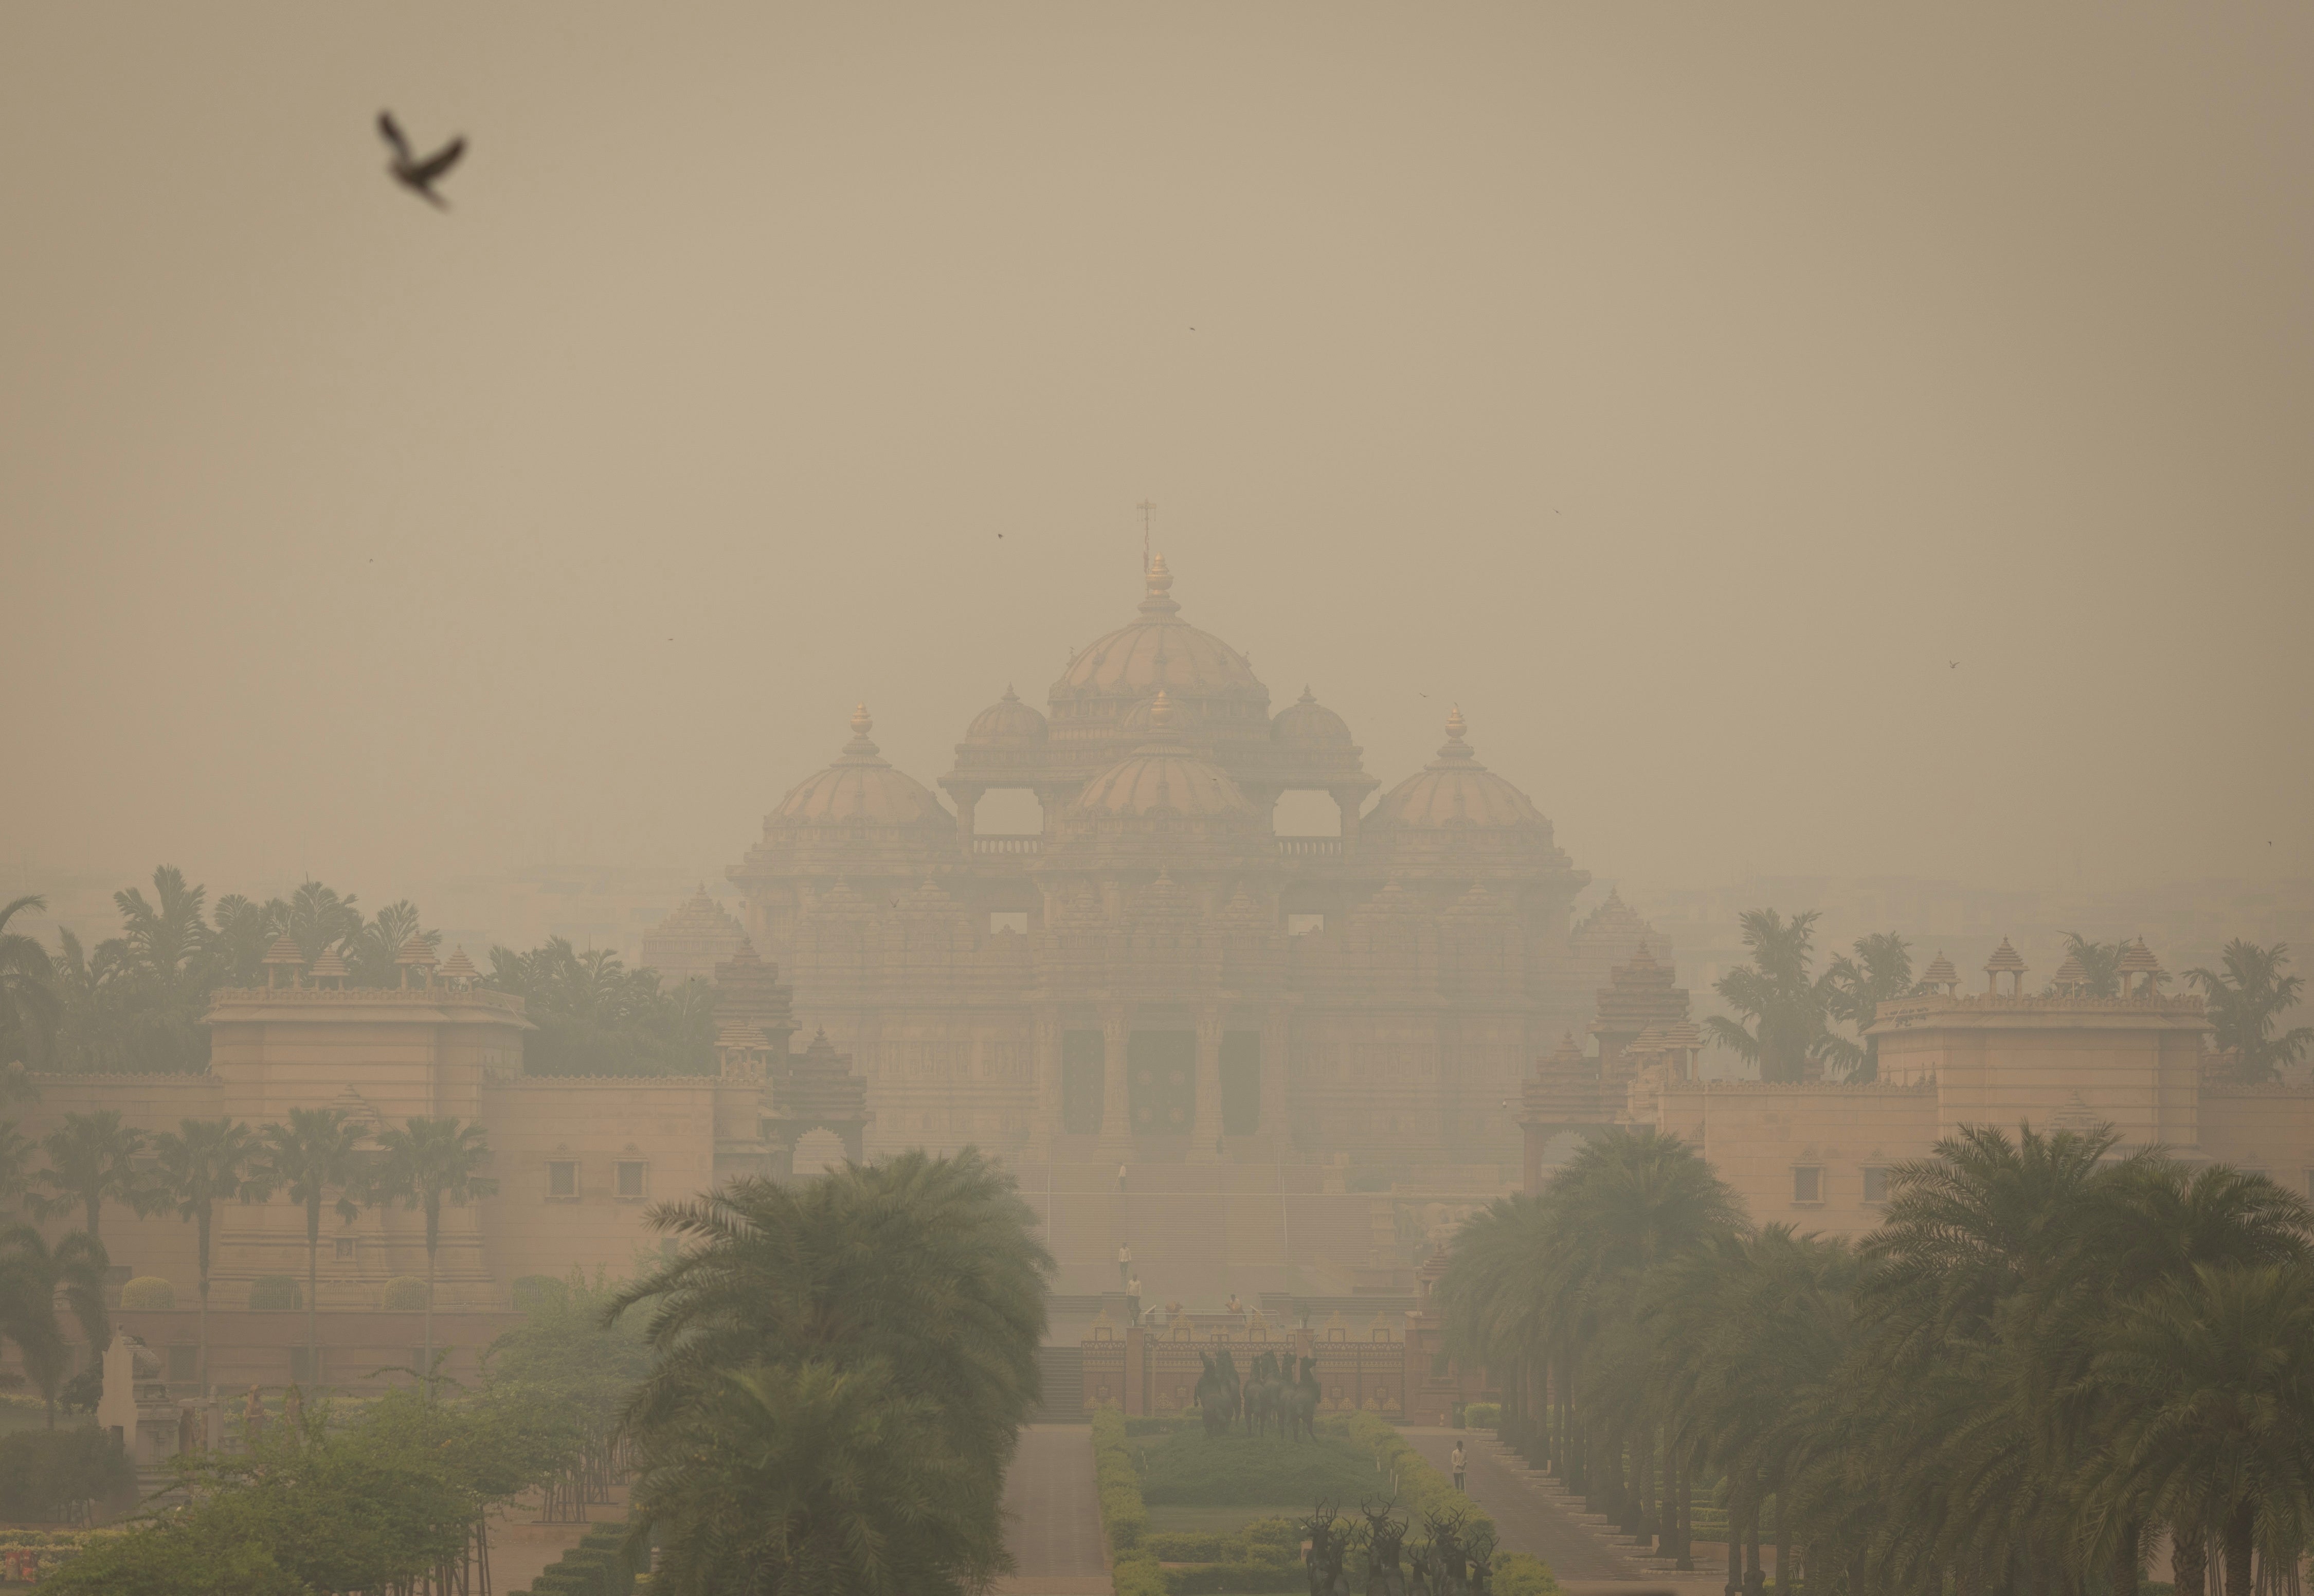 A bird flies next to the smog-covered Akshardham temple in New Delhi on 4 November 2022